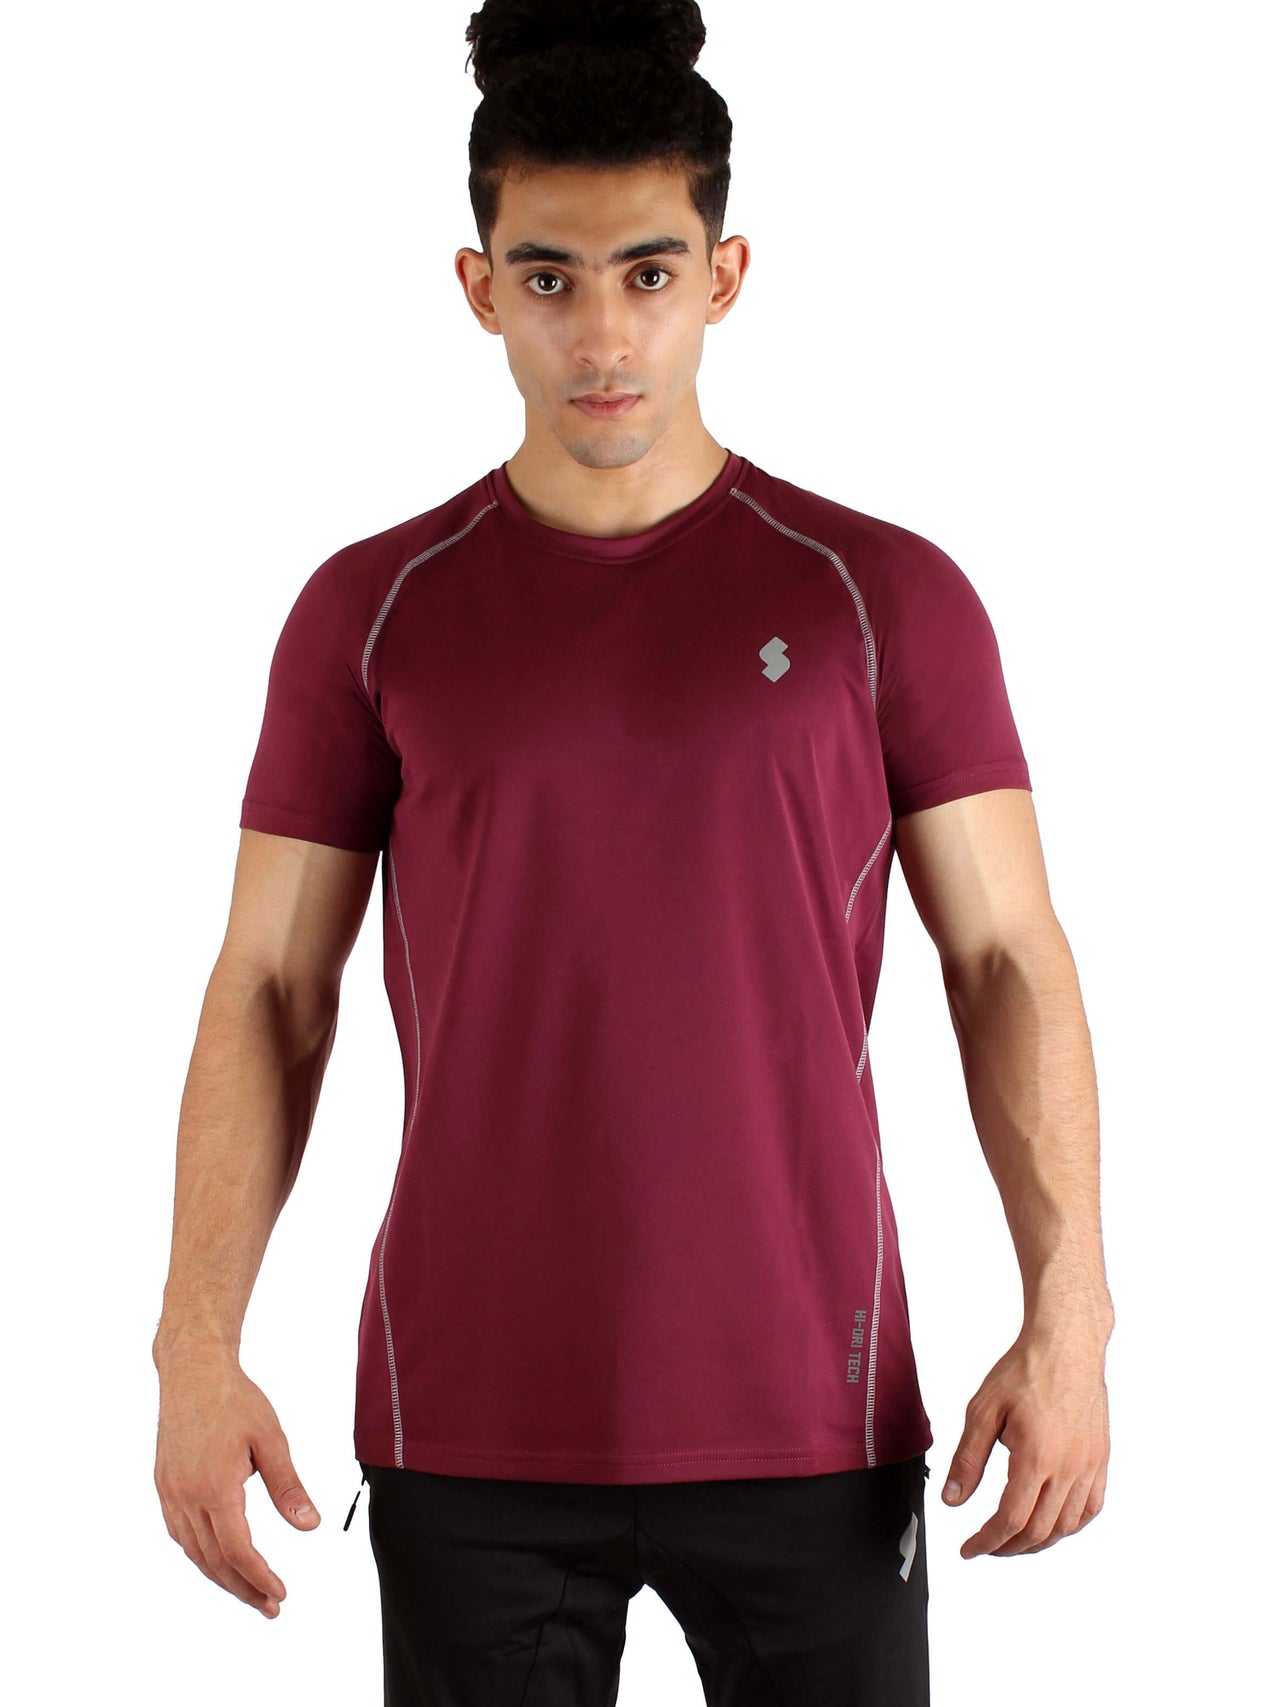 T18 Hi-Dri Raglan T-Shirt - Burgundy